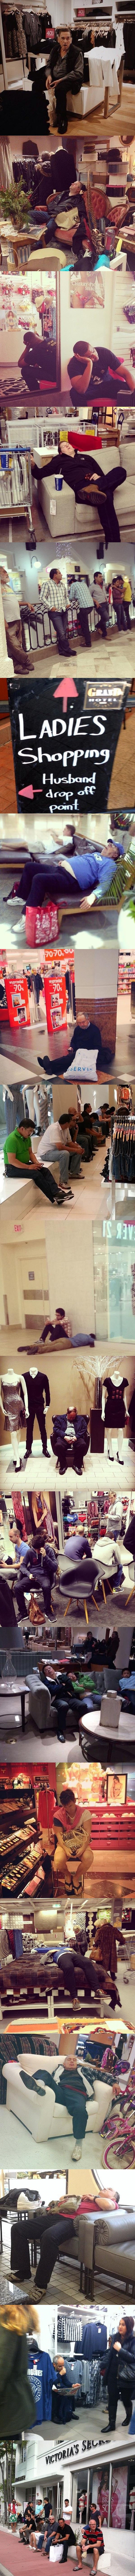 desperate men waiting for women to finish shopping